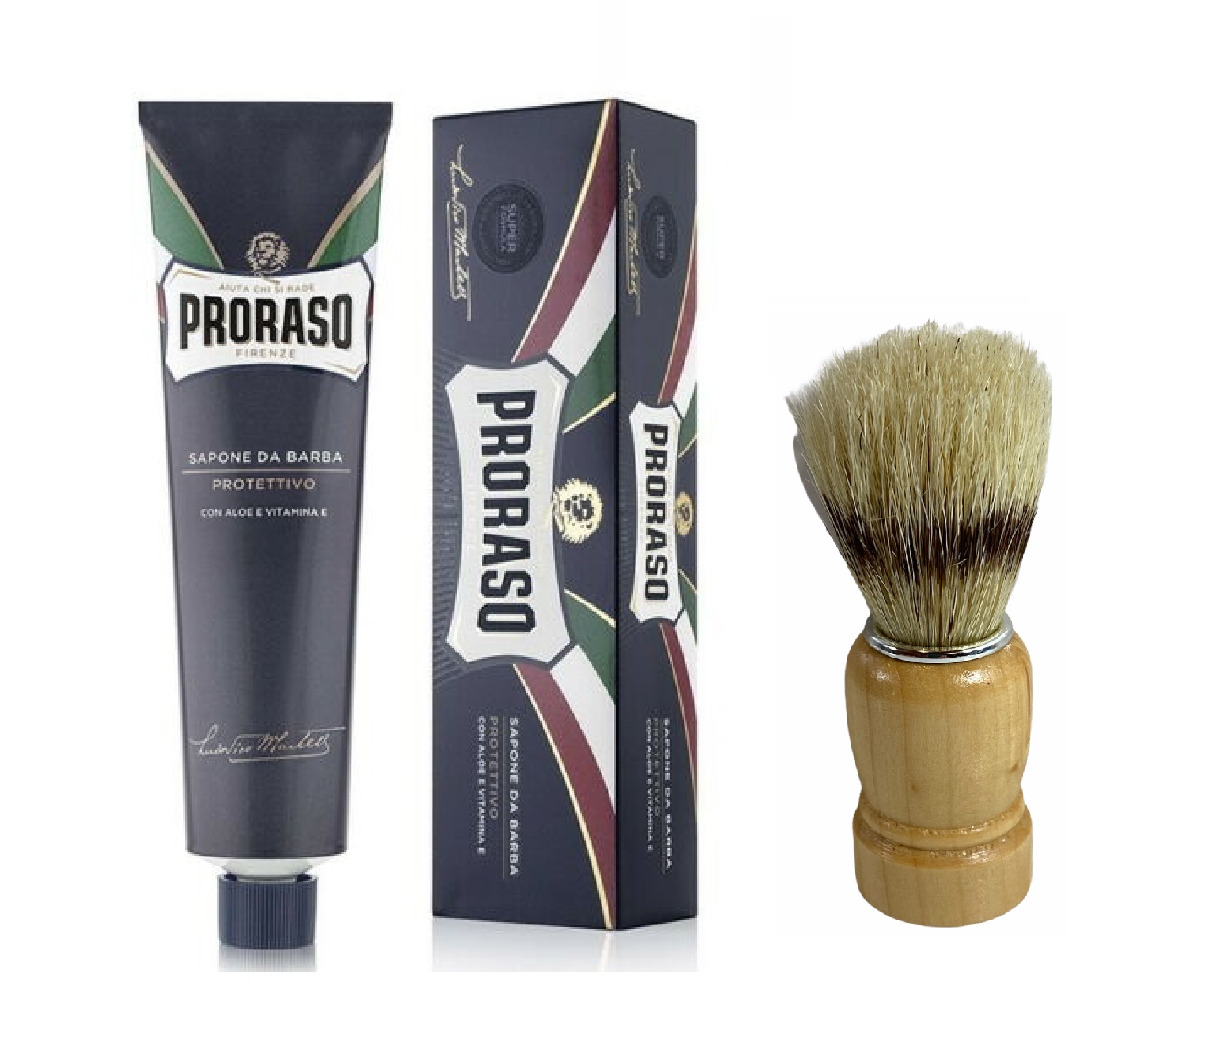 Proraso Moisturizing Shaving Cream with Brush